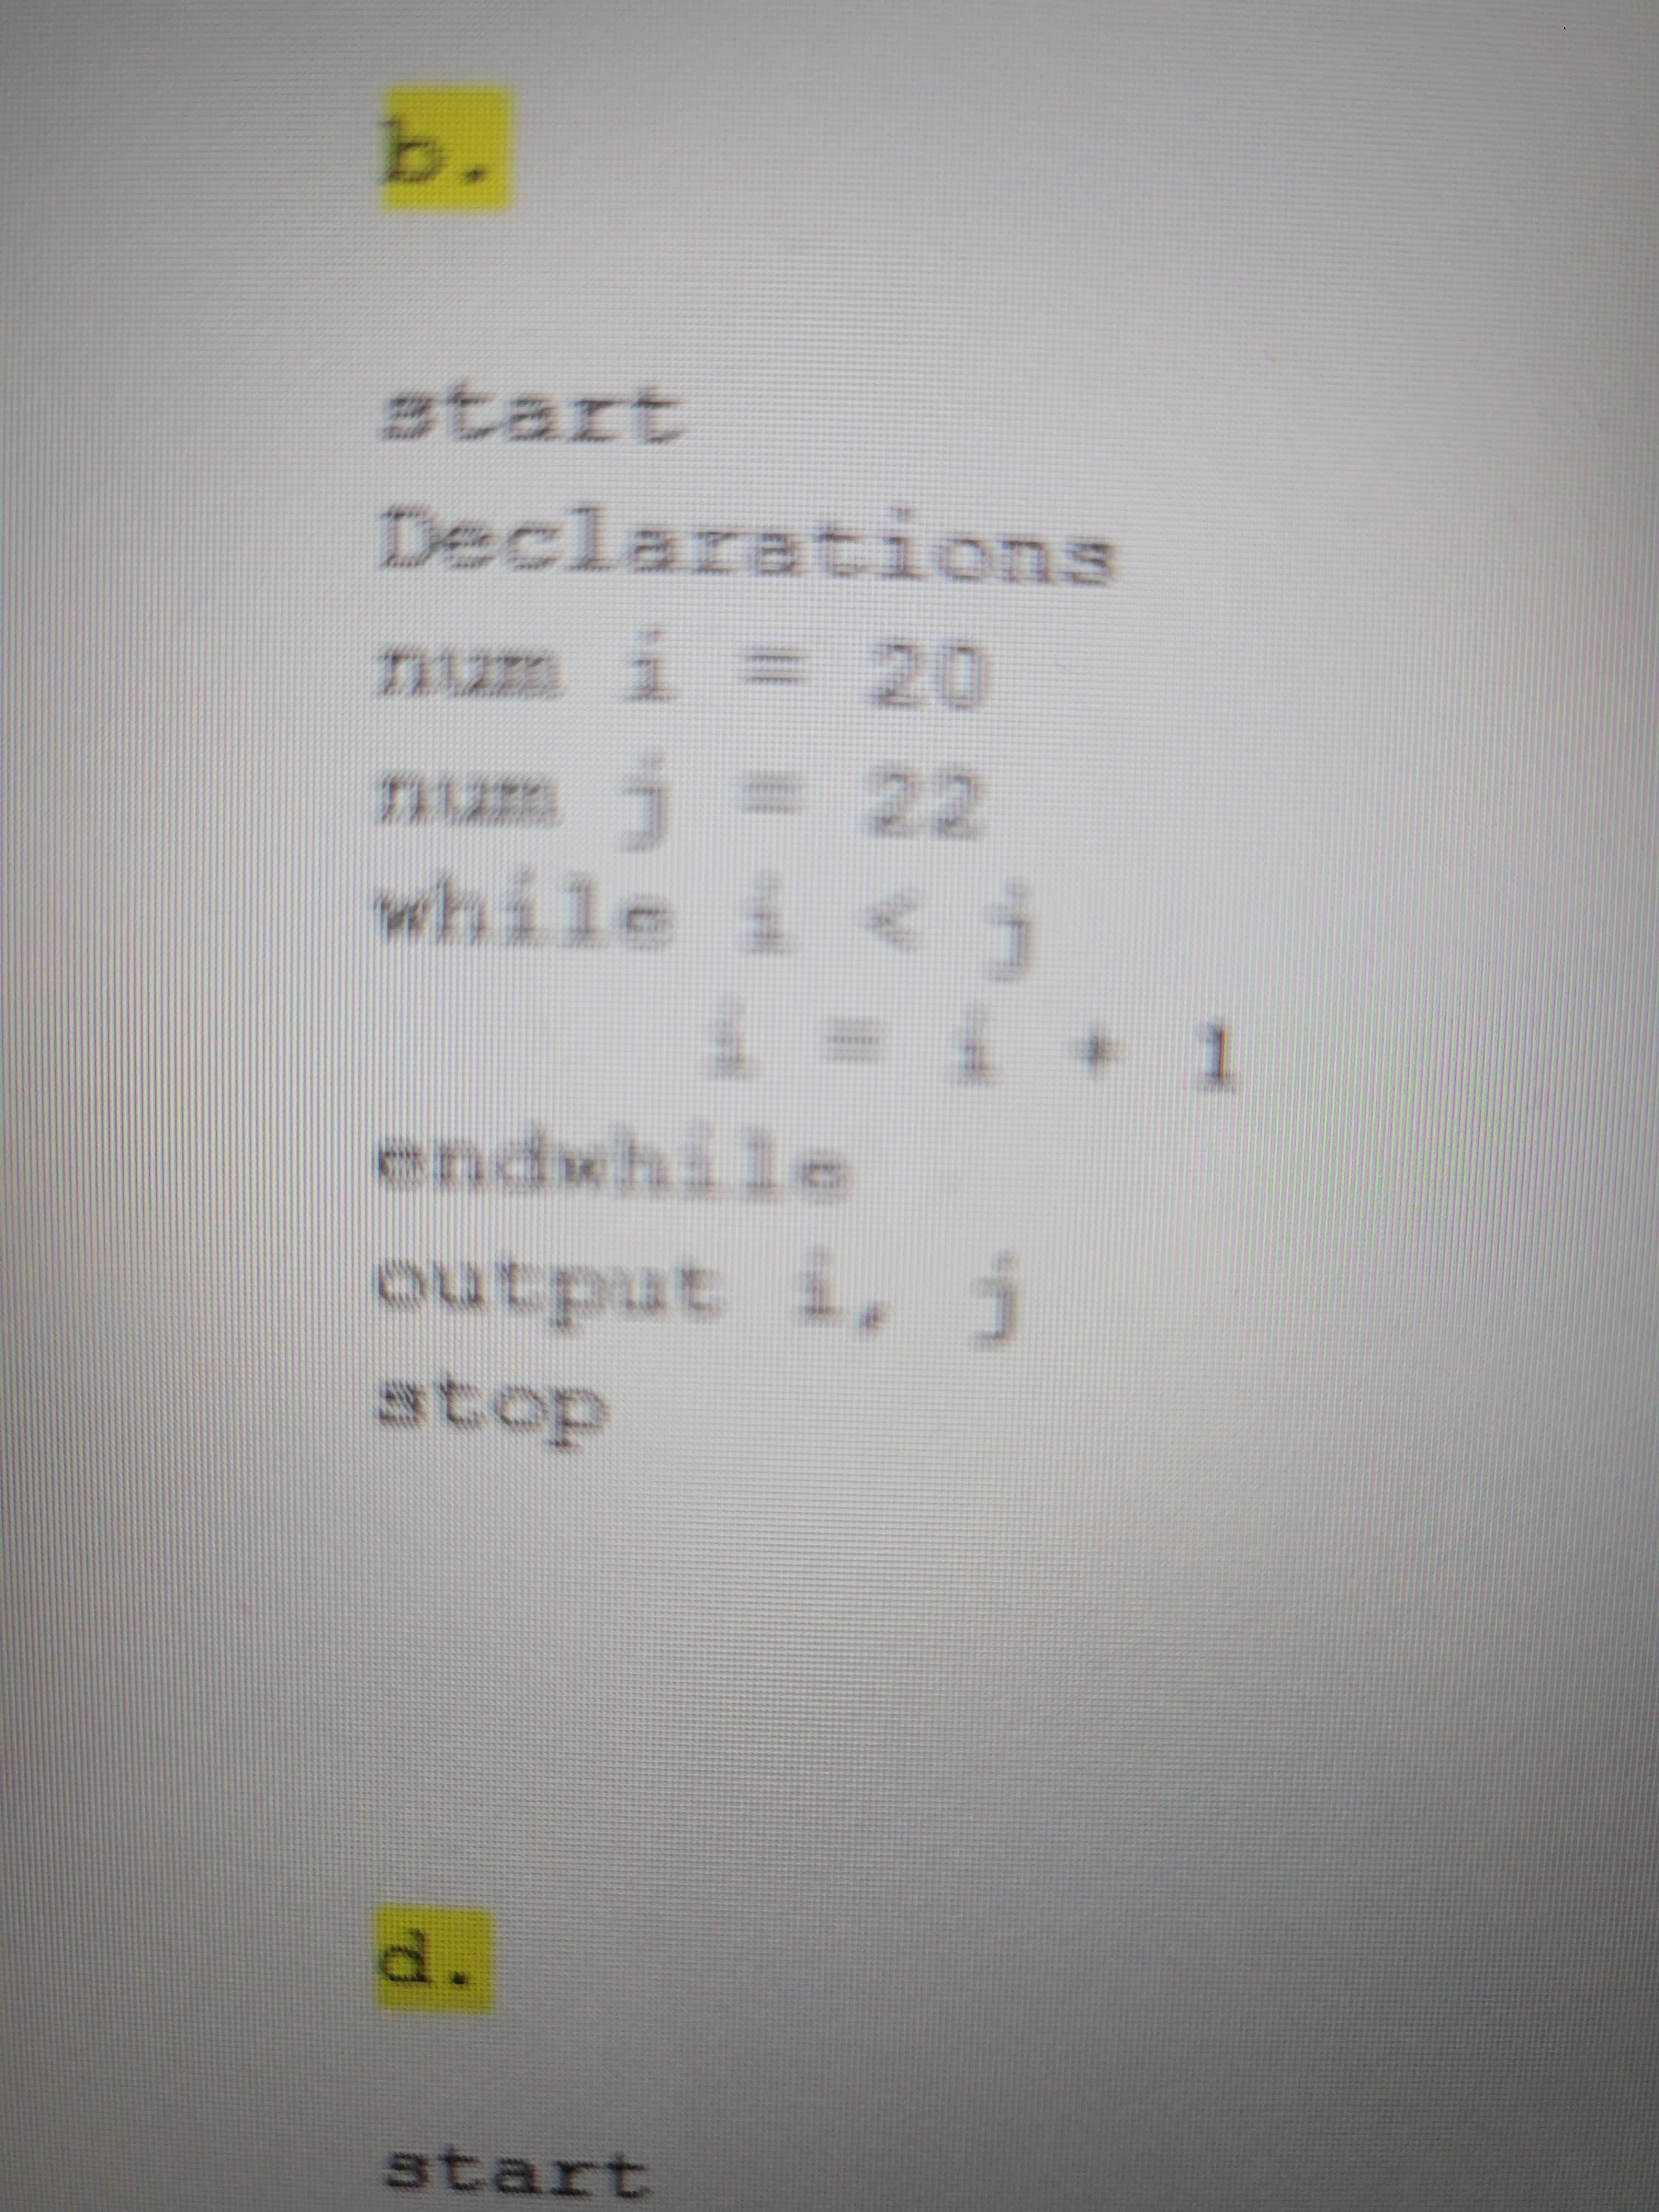 b.
atart
Declarations
num i = 20
while i <j
endwhile
I * T = T
output i, j
andano
stop
d.
start
